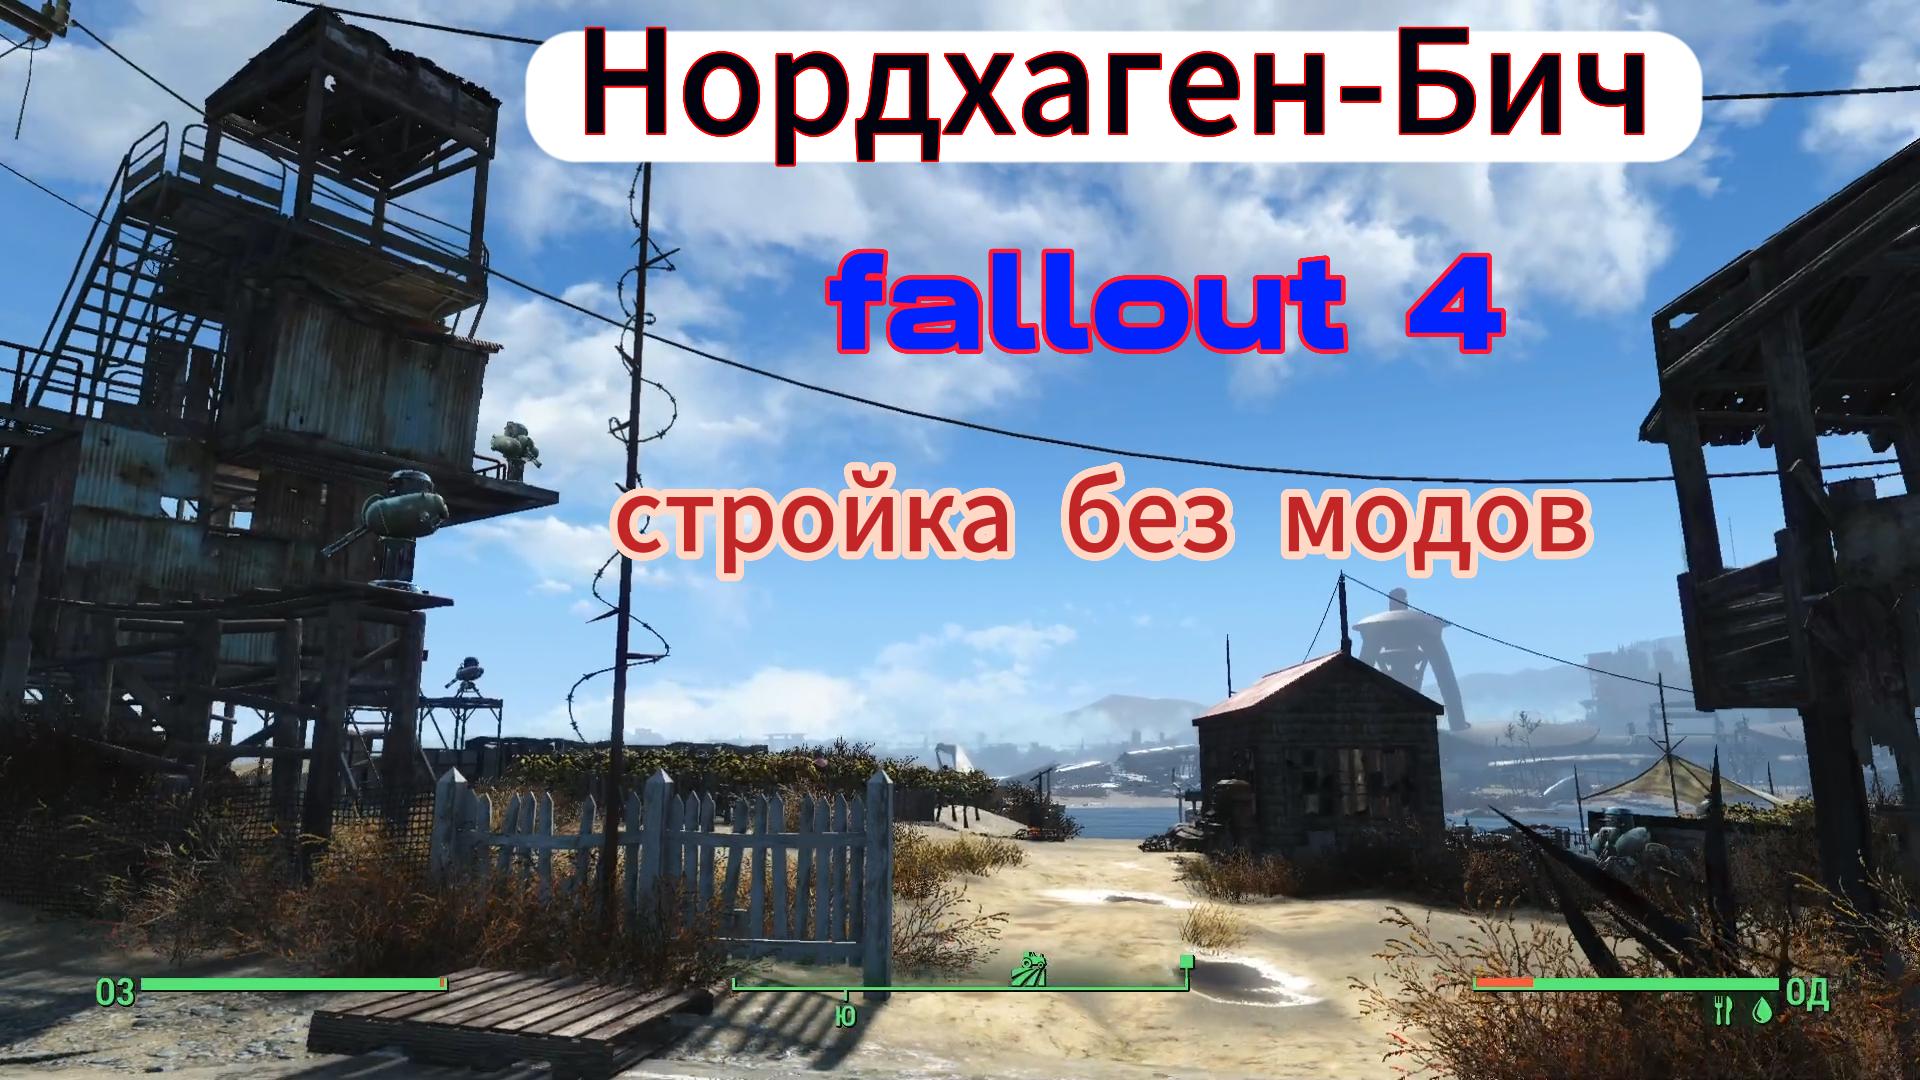 Fallout 4. Нордхаген-Бич(Обзор).